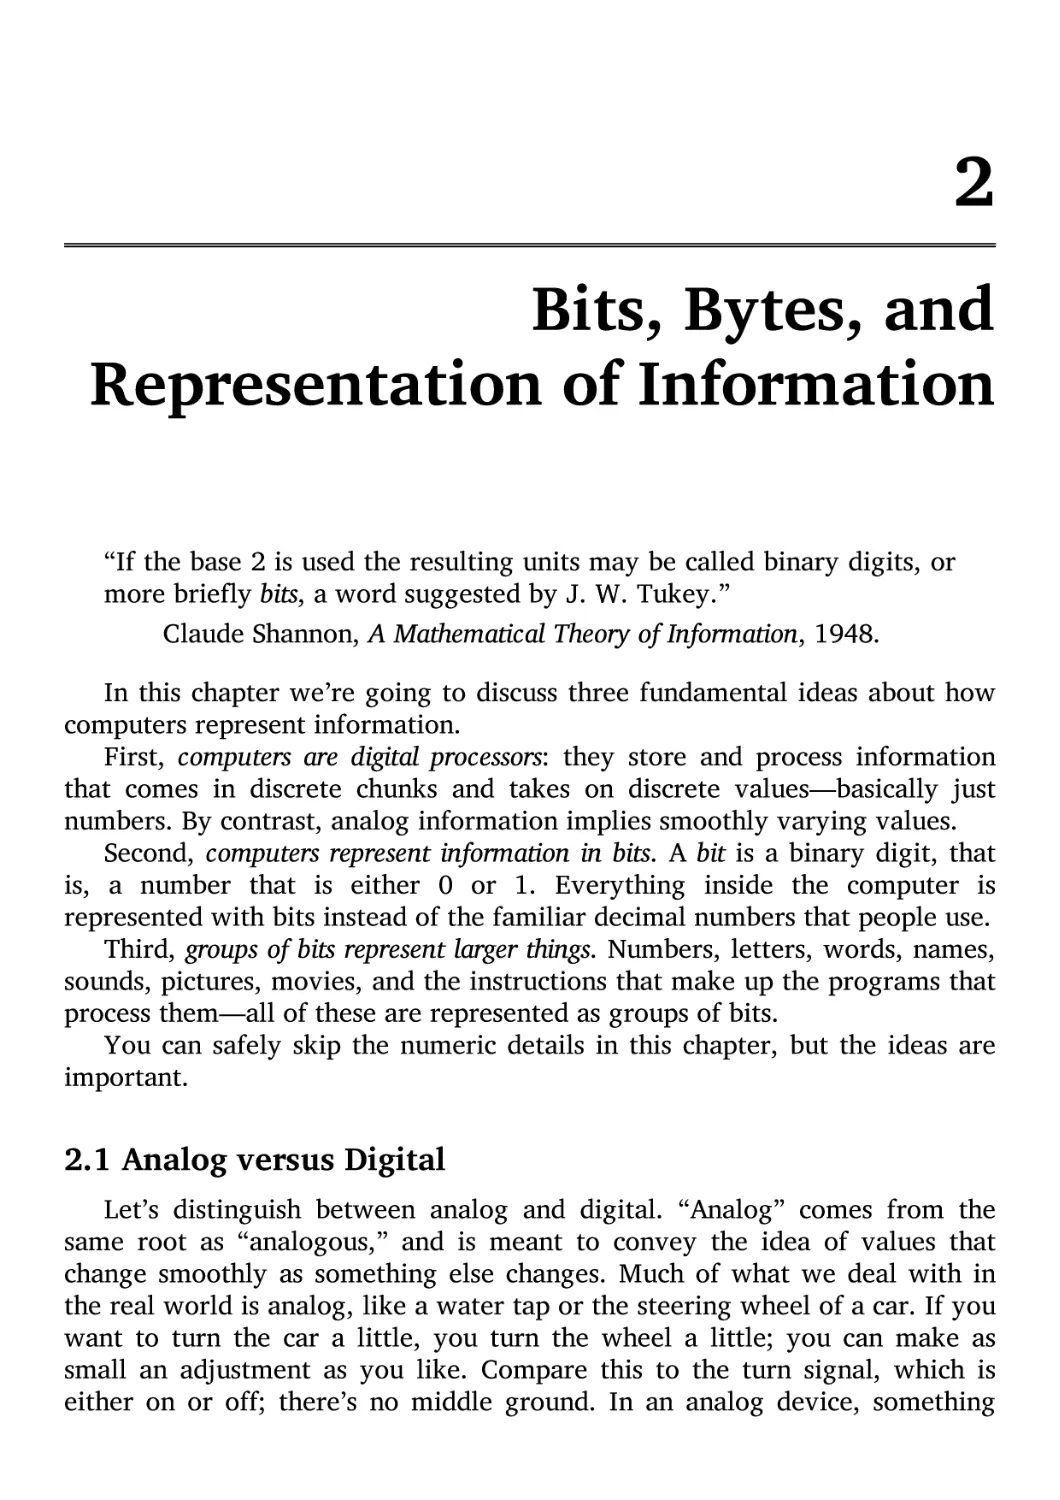 2. Bits, Bytes, and Representation of Information
2.1 Analog versus Digital